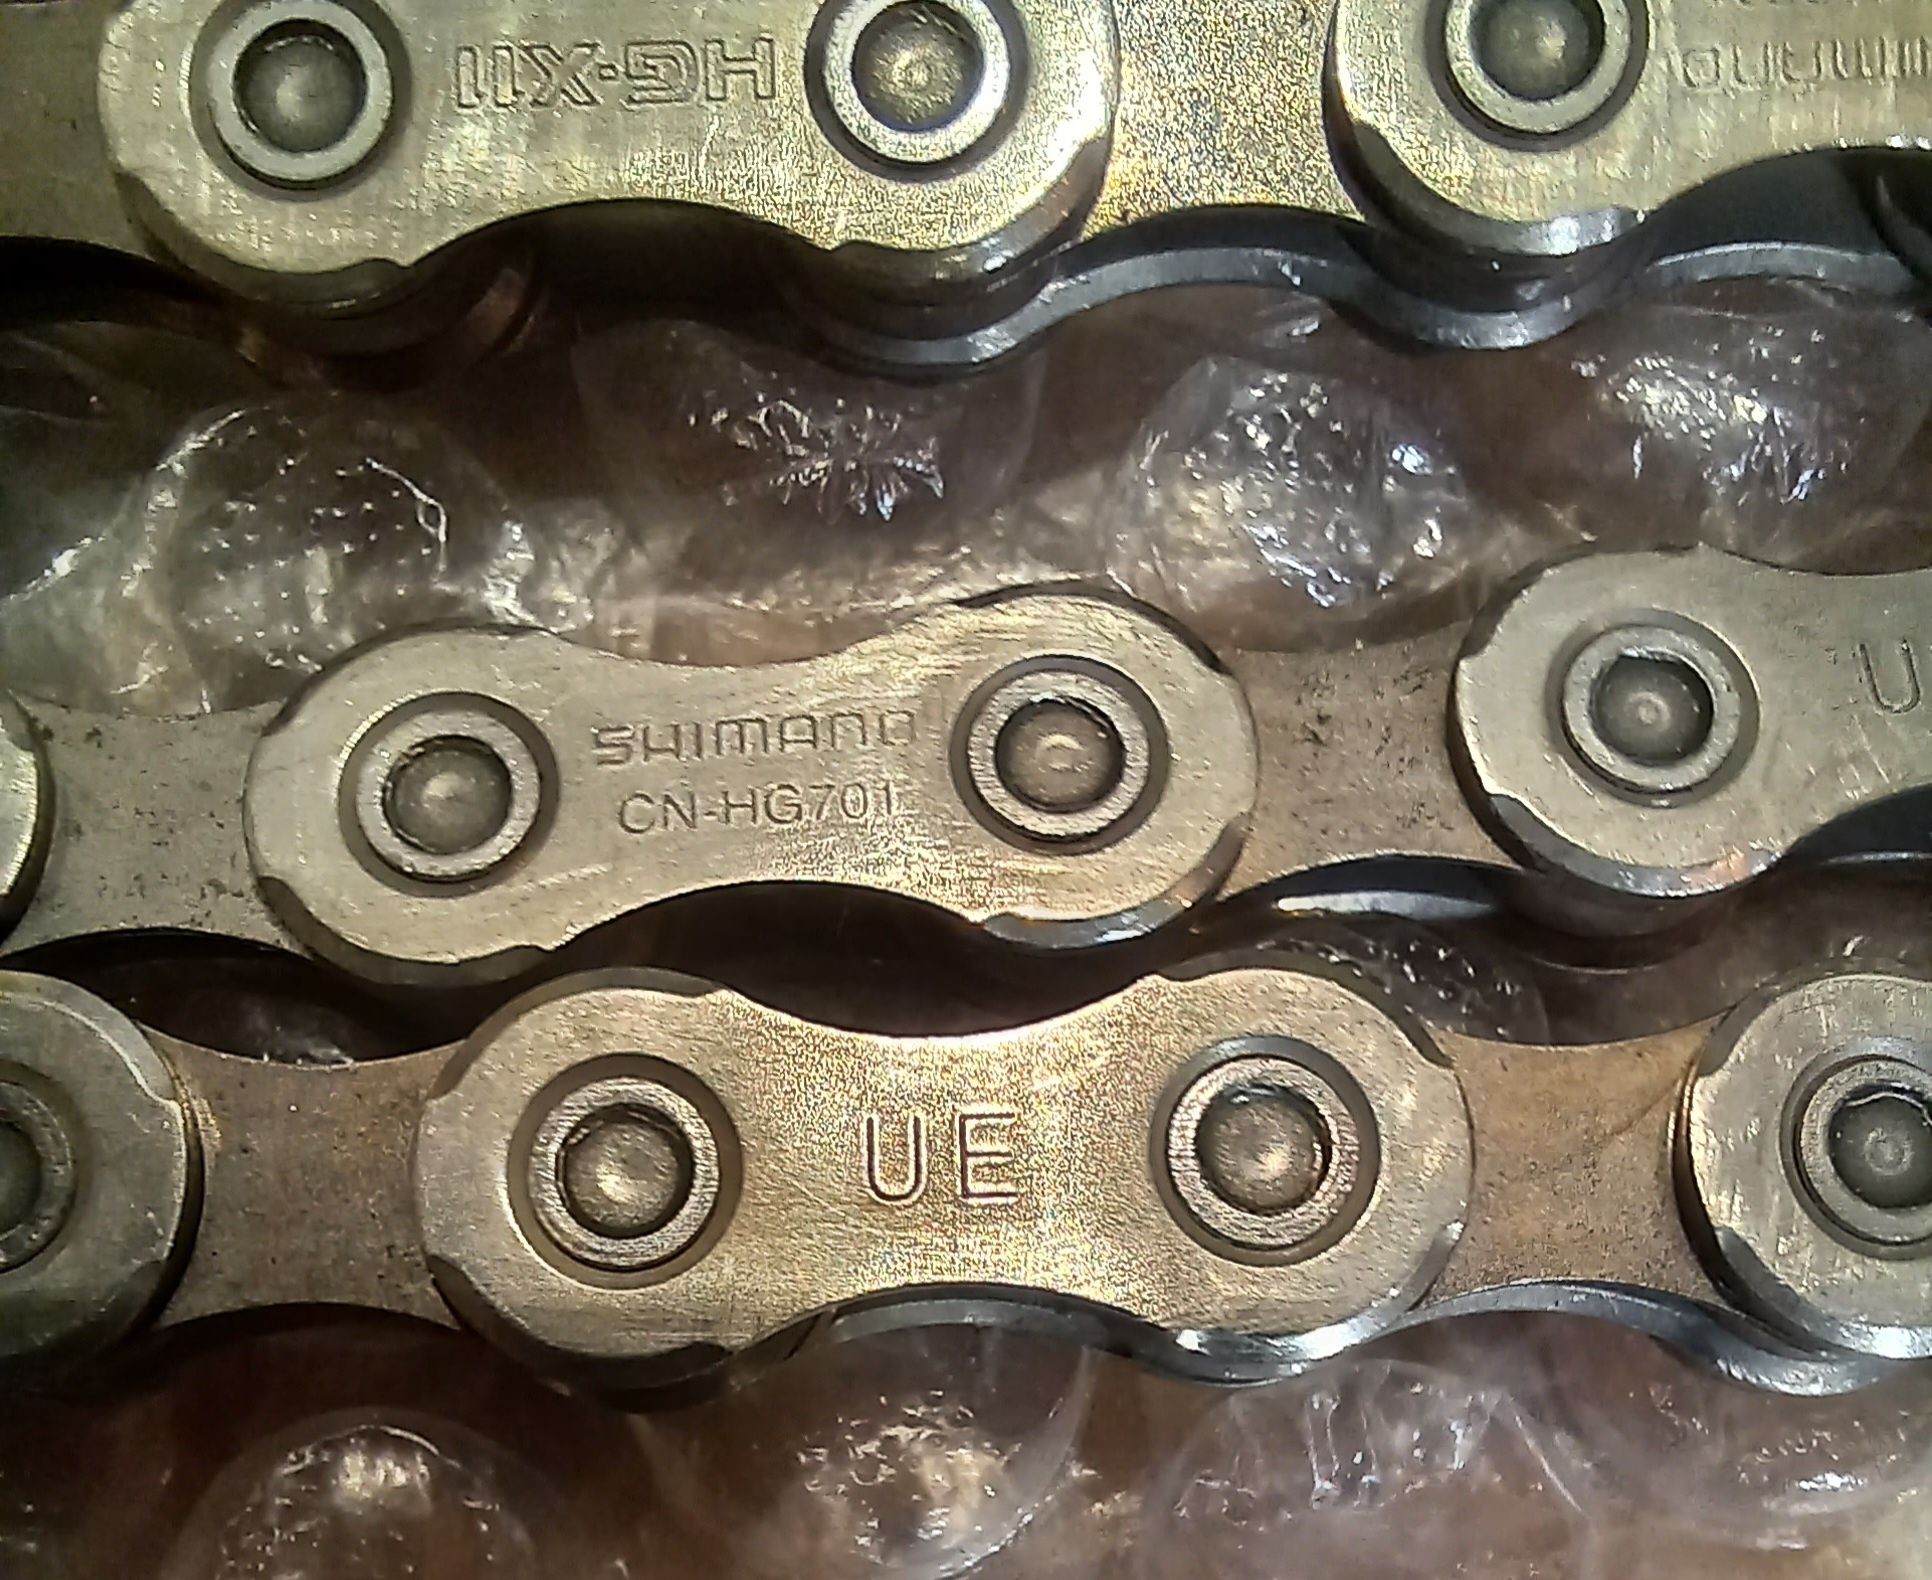 Łańcuch kierunkowy shimano Ultegra cn-hg 701 ze spinka